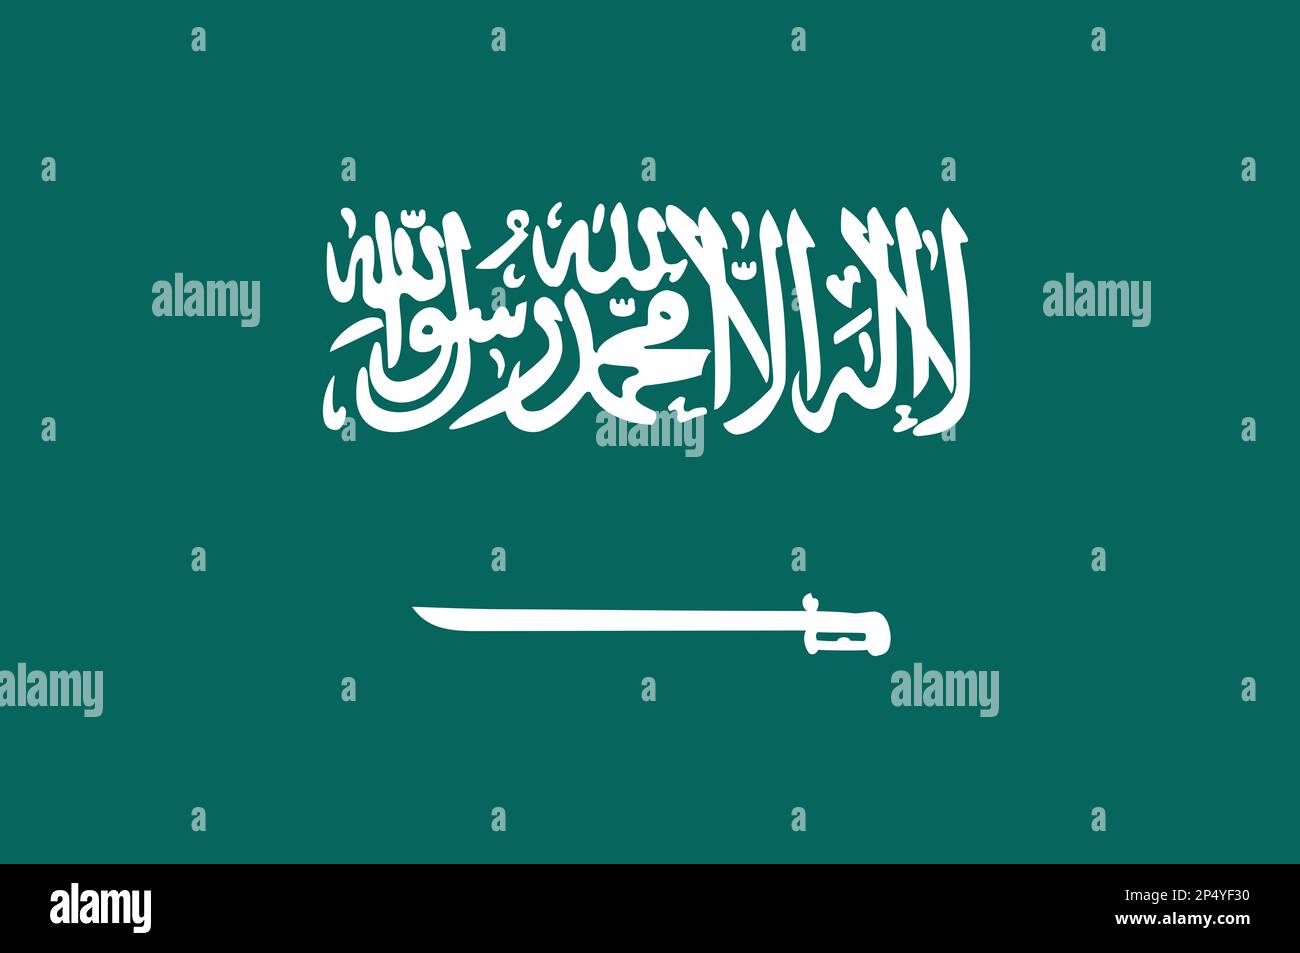 National flag of the Kingdom of Saudi Arabia Stock Photo